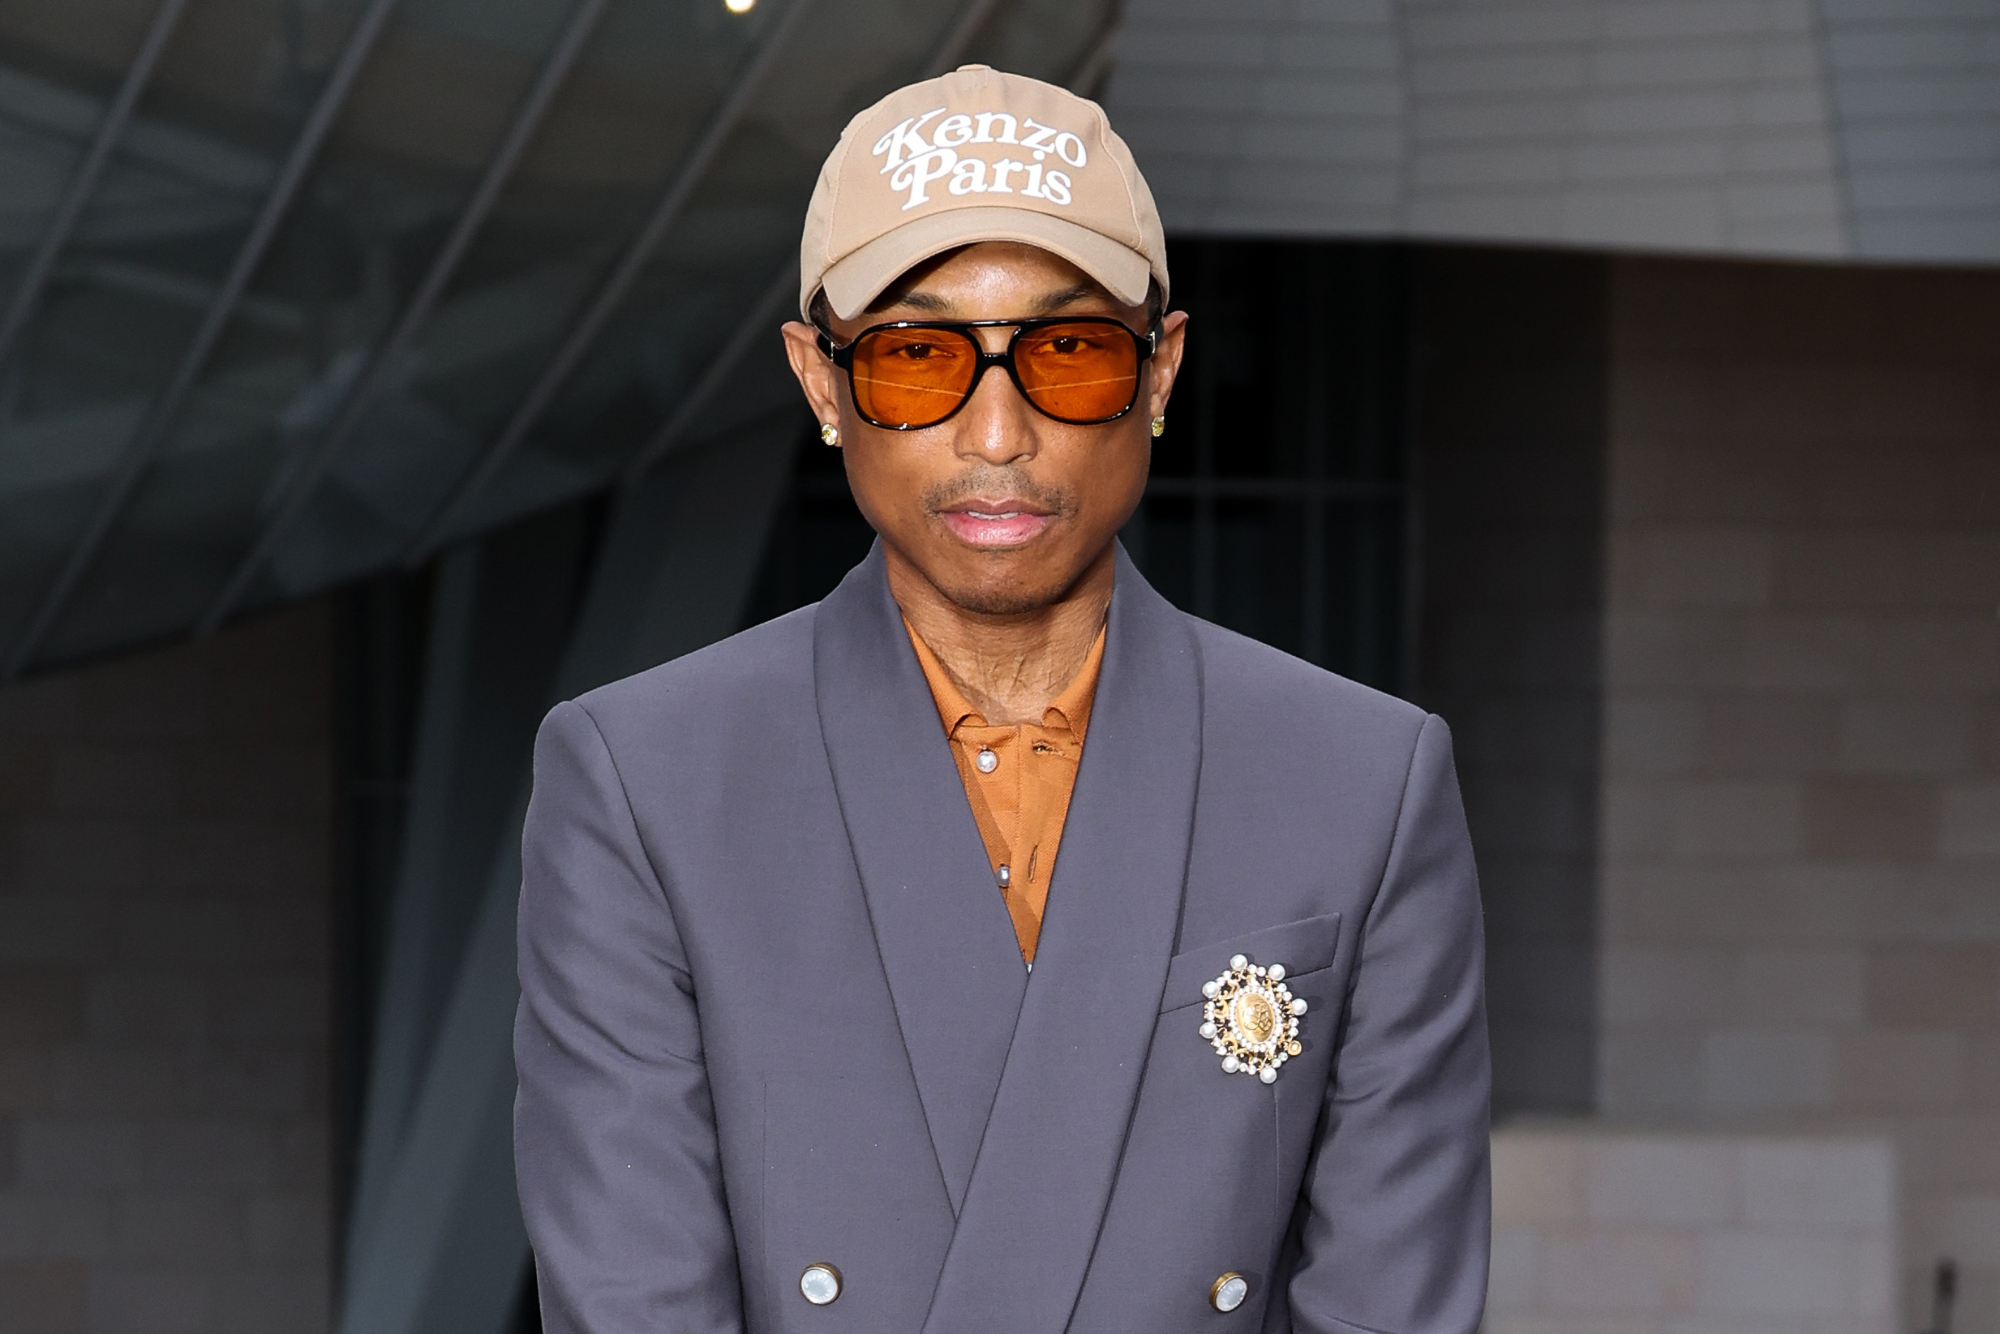 Pharrell in Paris for the 2024 Olympics